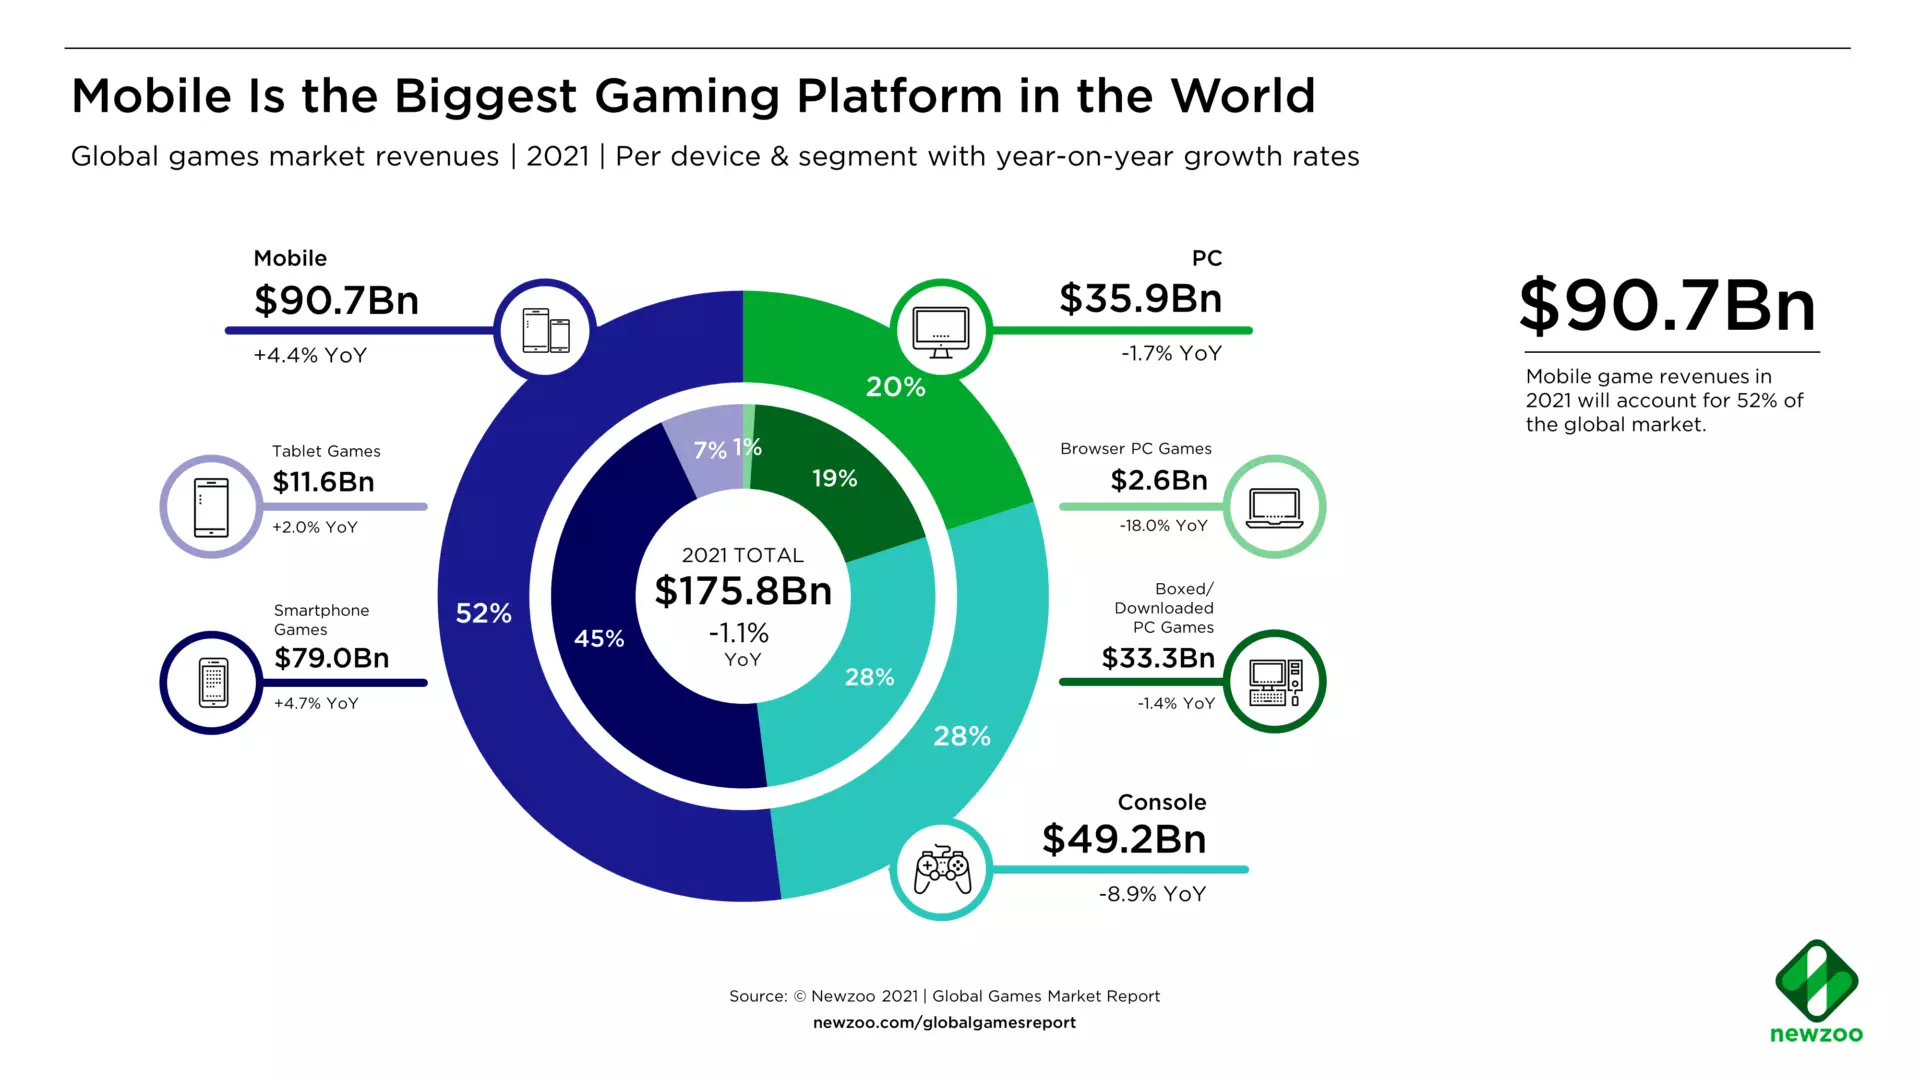 Mobile-Is-the-Biggest-Games-Platform-in-the-World-1920x1080-1 Mercado de jogos mobile já é maior que PC e Console juntos